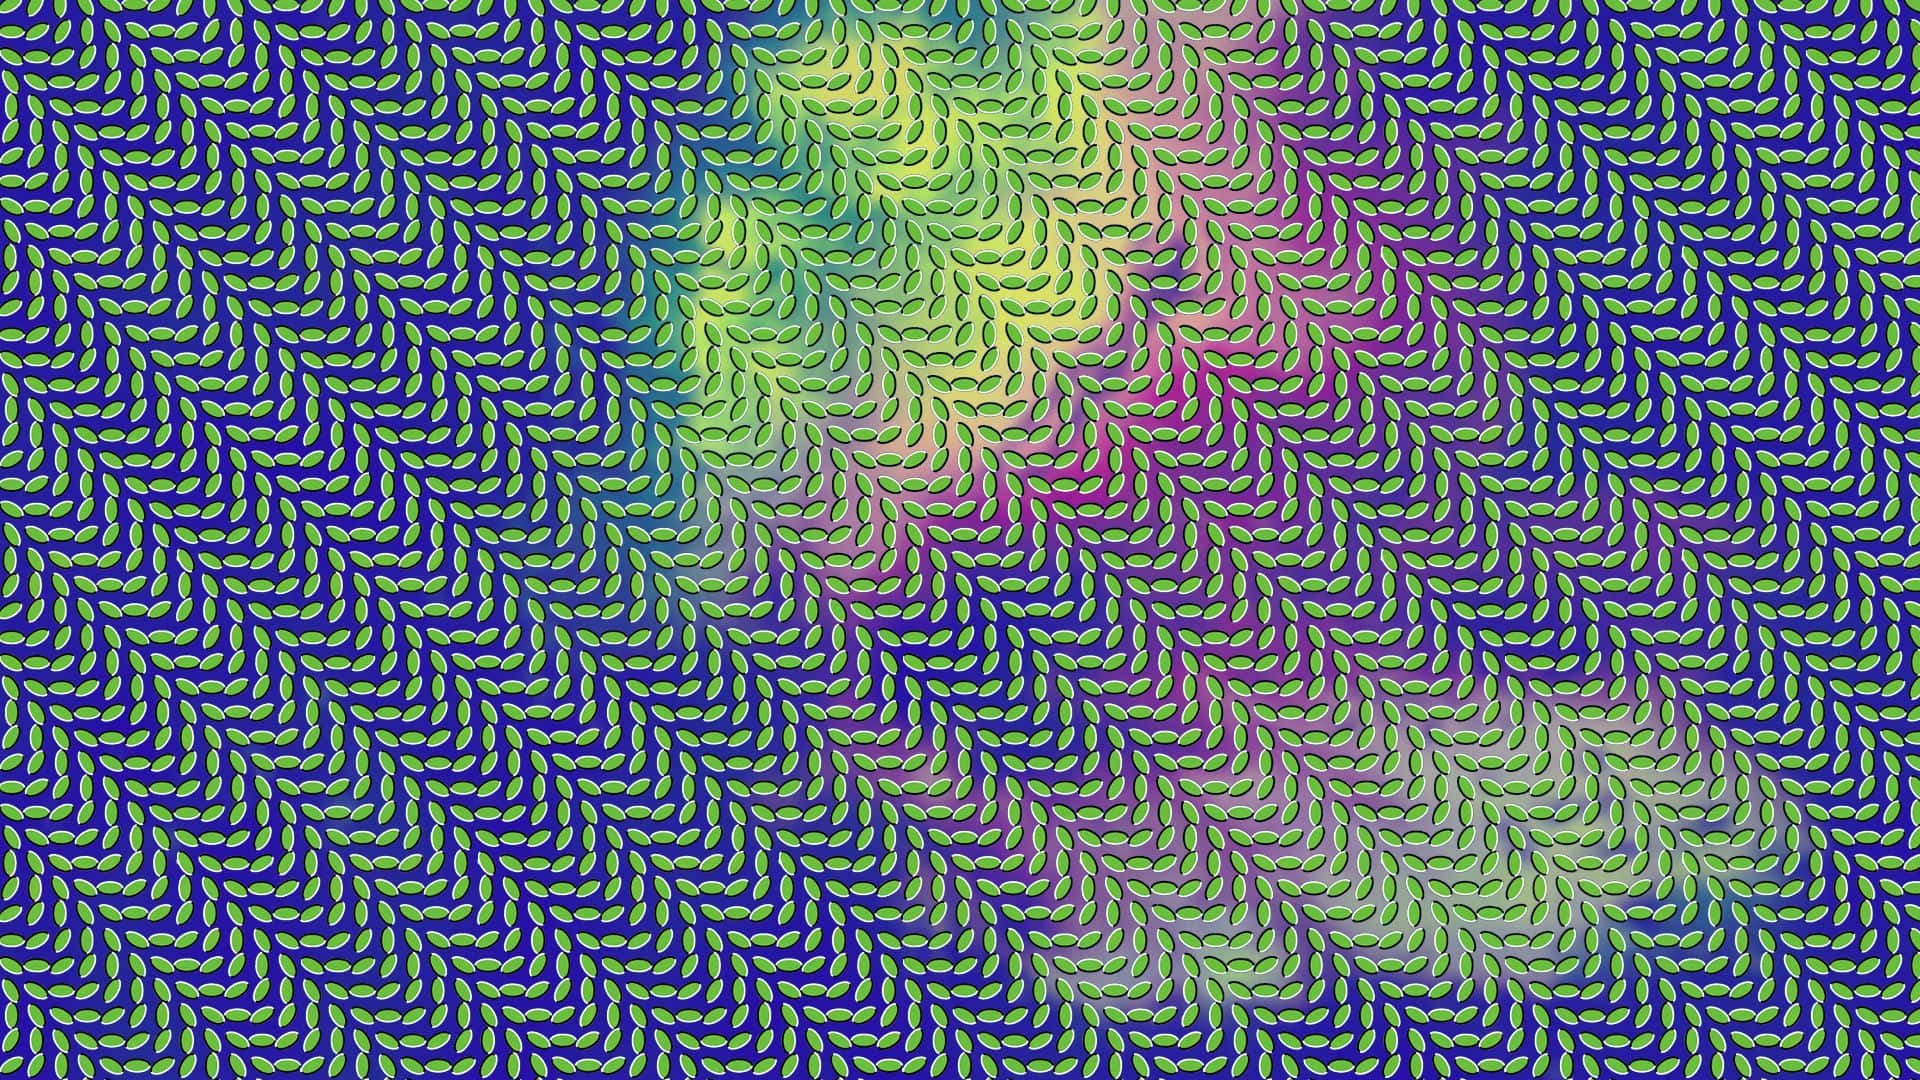 Hypnotic Spiral Optical Illusion Wallpaper